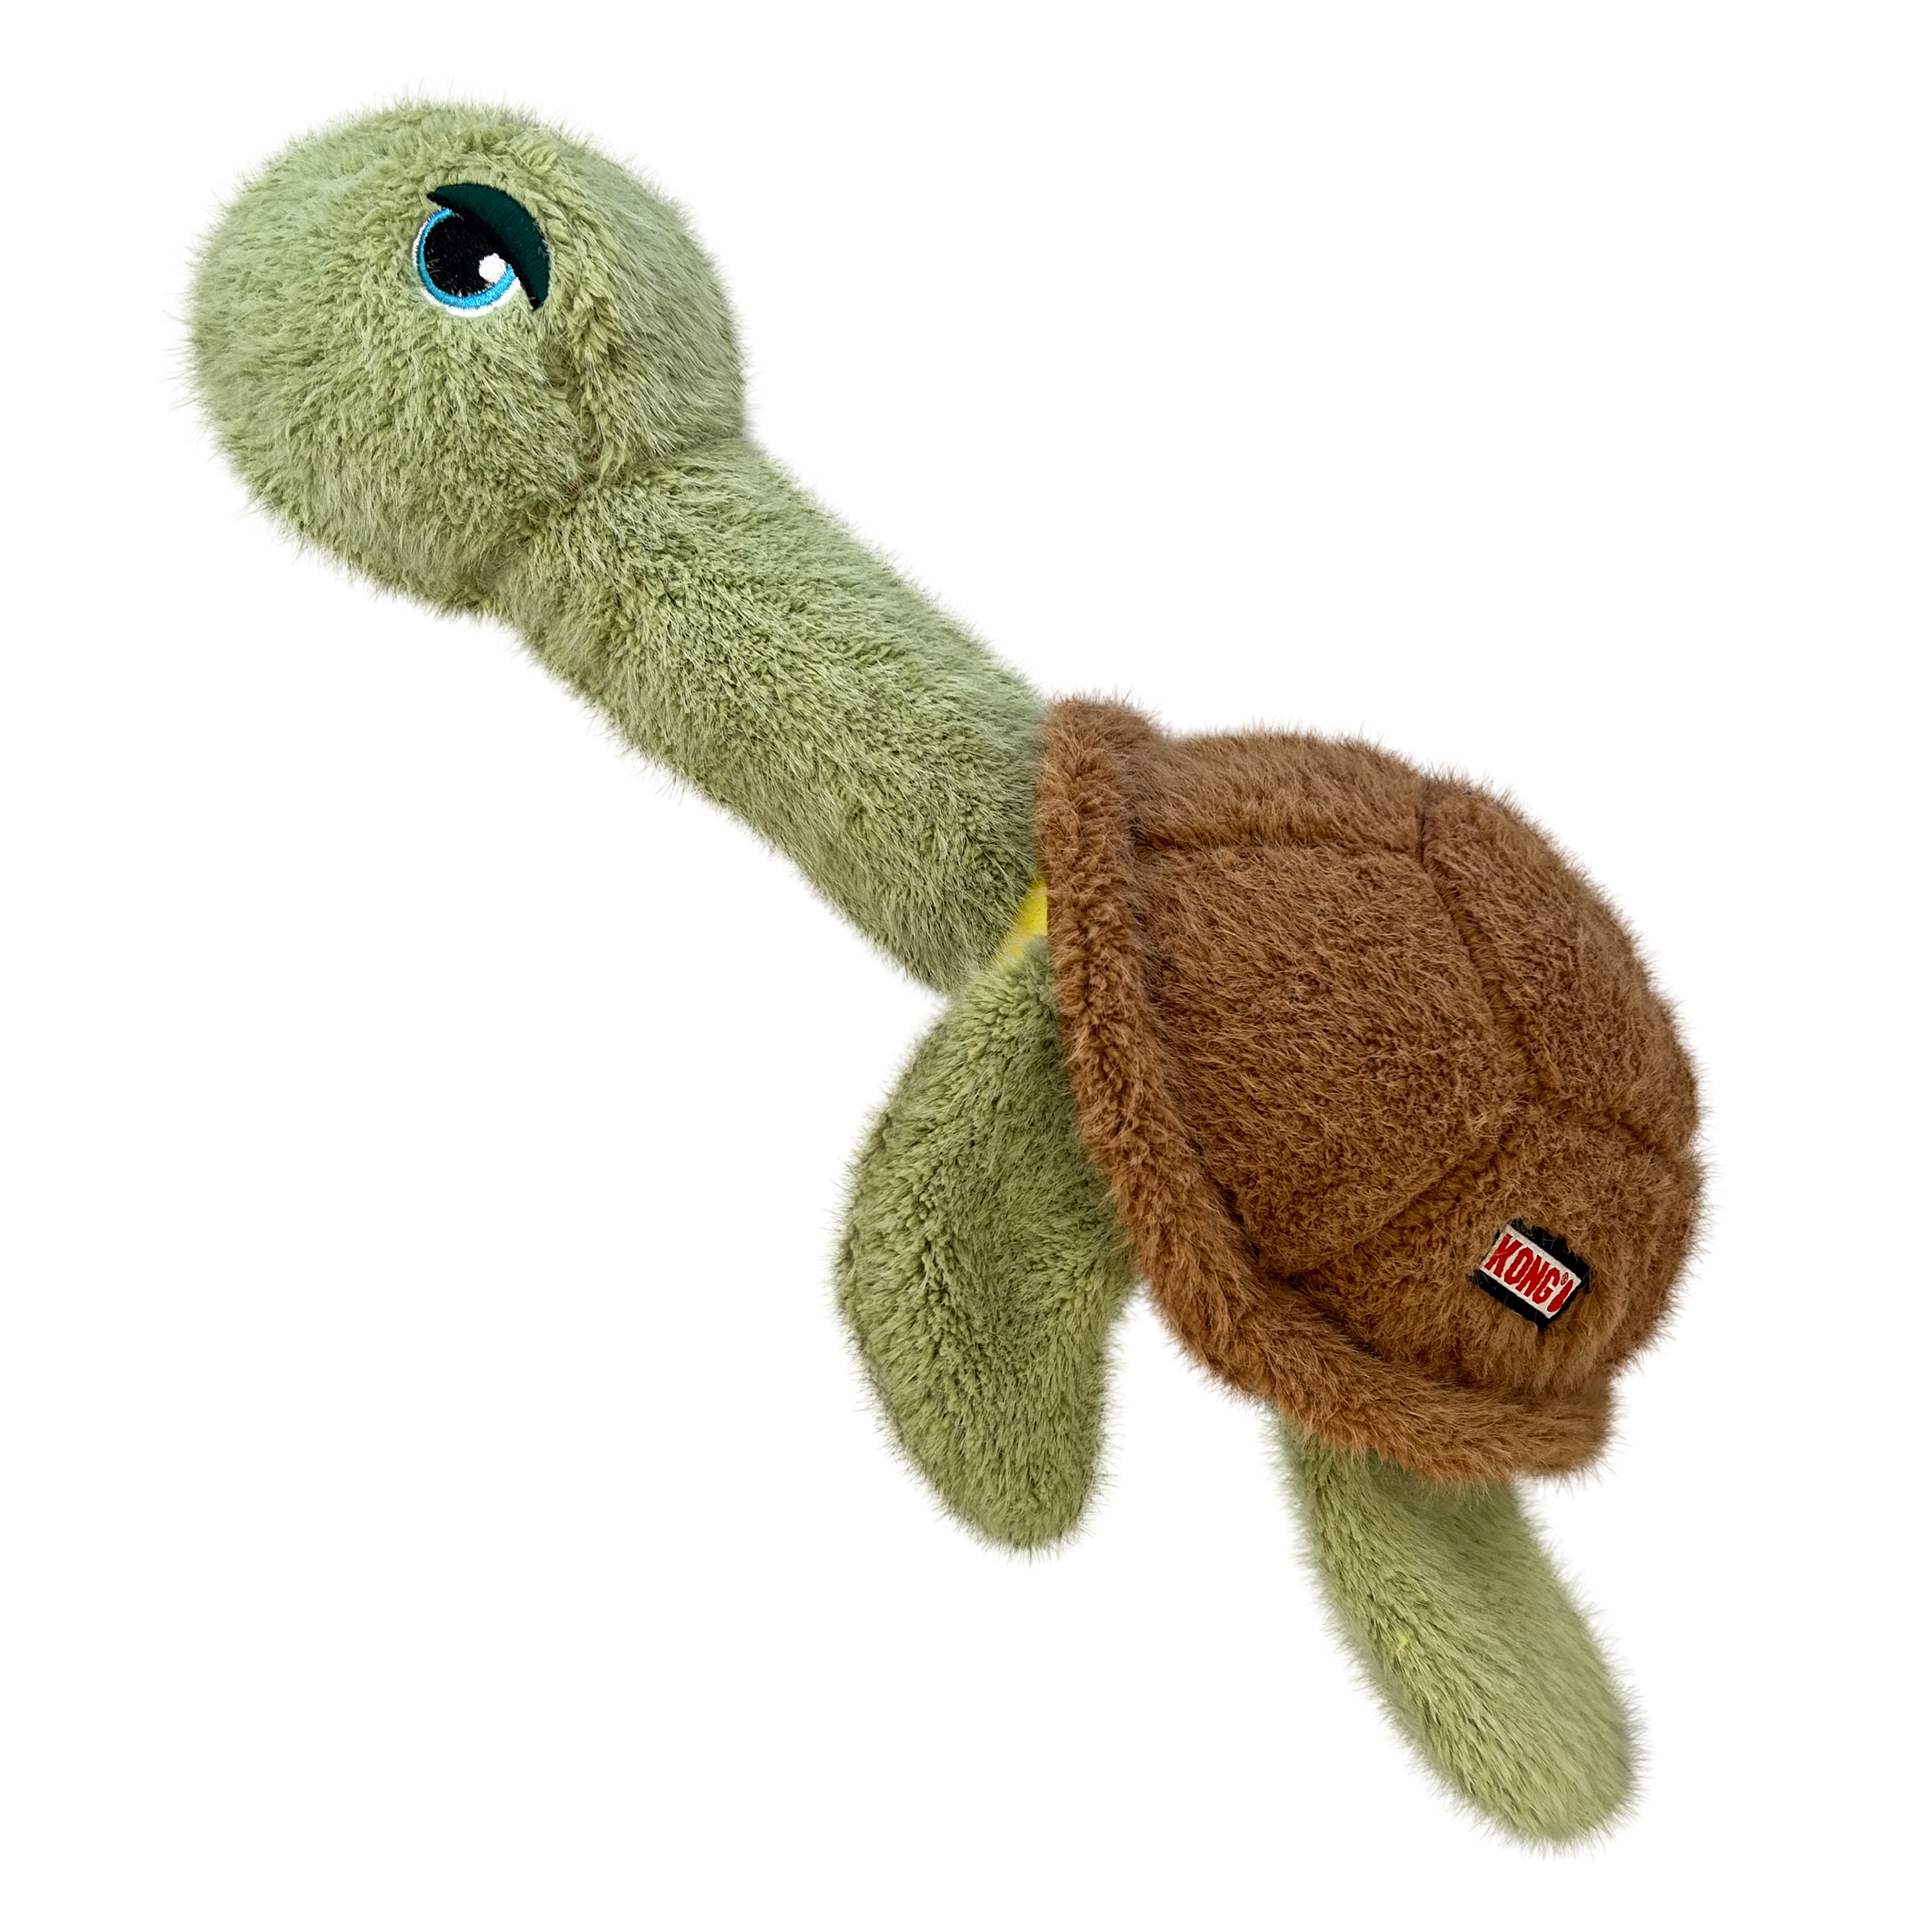 Scruffs Turtle lifestyle product image